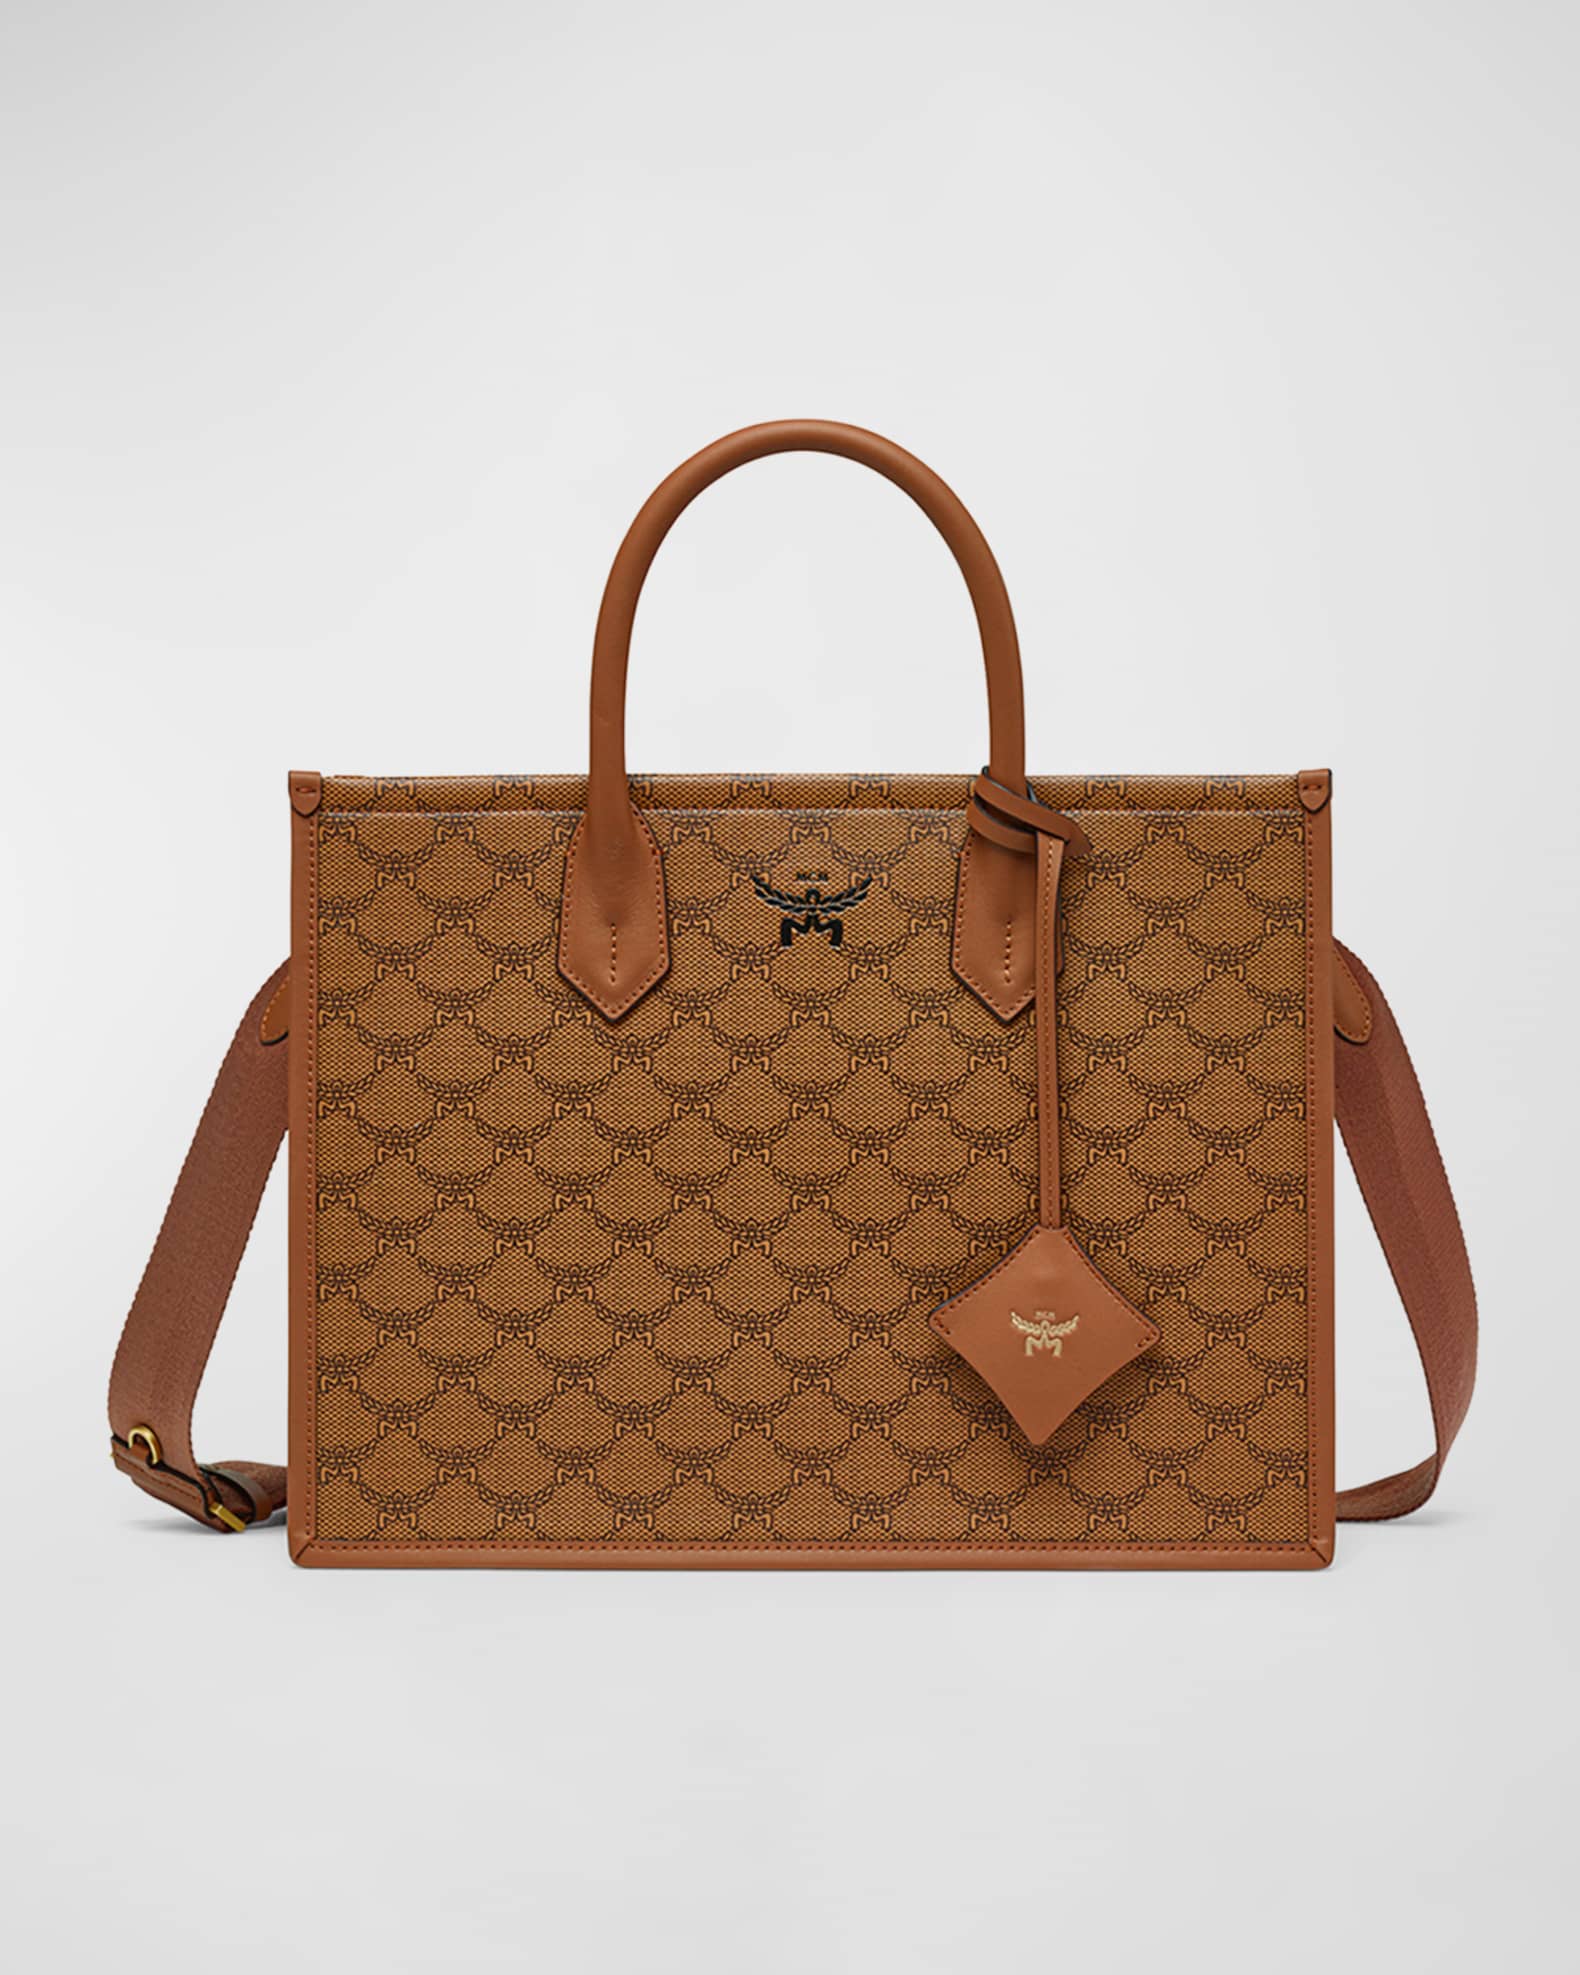 Louis Vuitton Monogram Kimono Handbag. This sophisticated handbag is